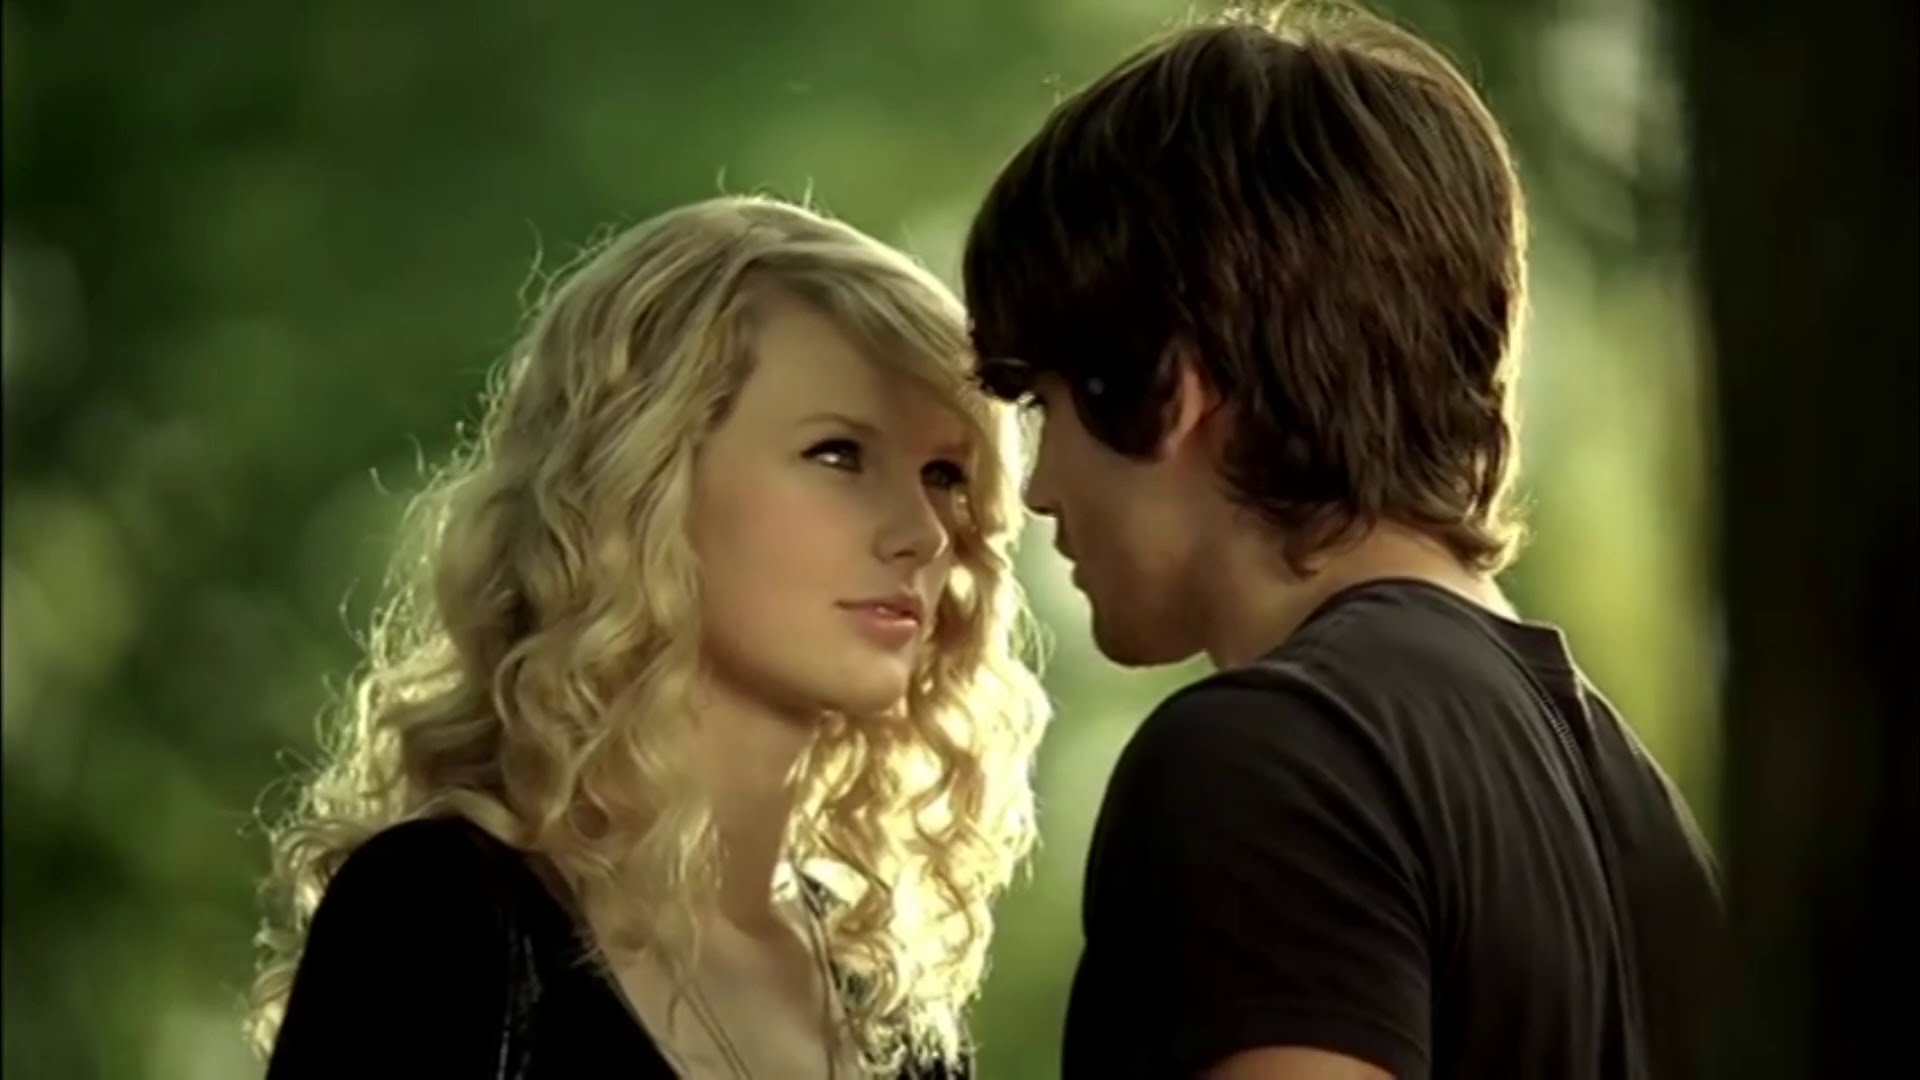 This love story. Taylor Swift Love story. Taylor Swift - Love story обложка. Love story Swift. Паола - на тонкие нити..